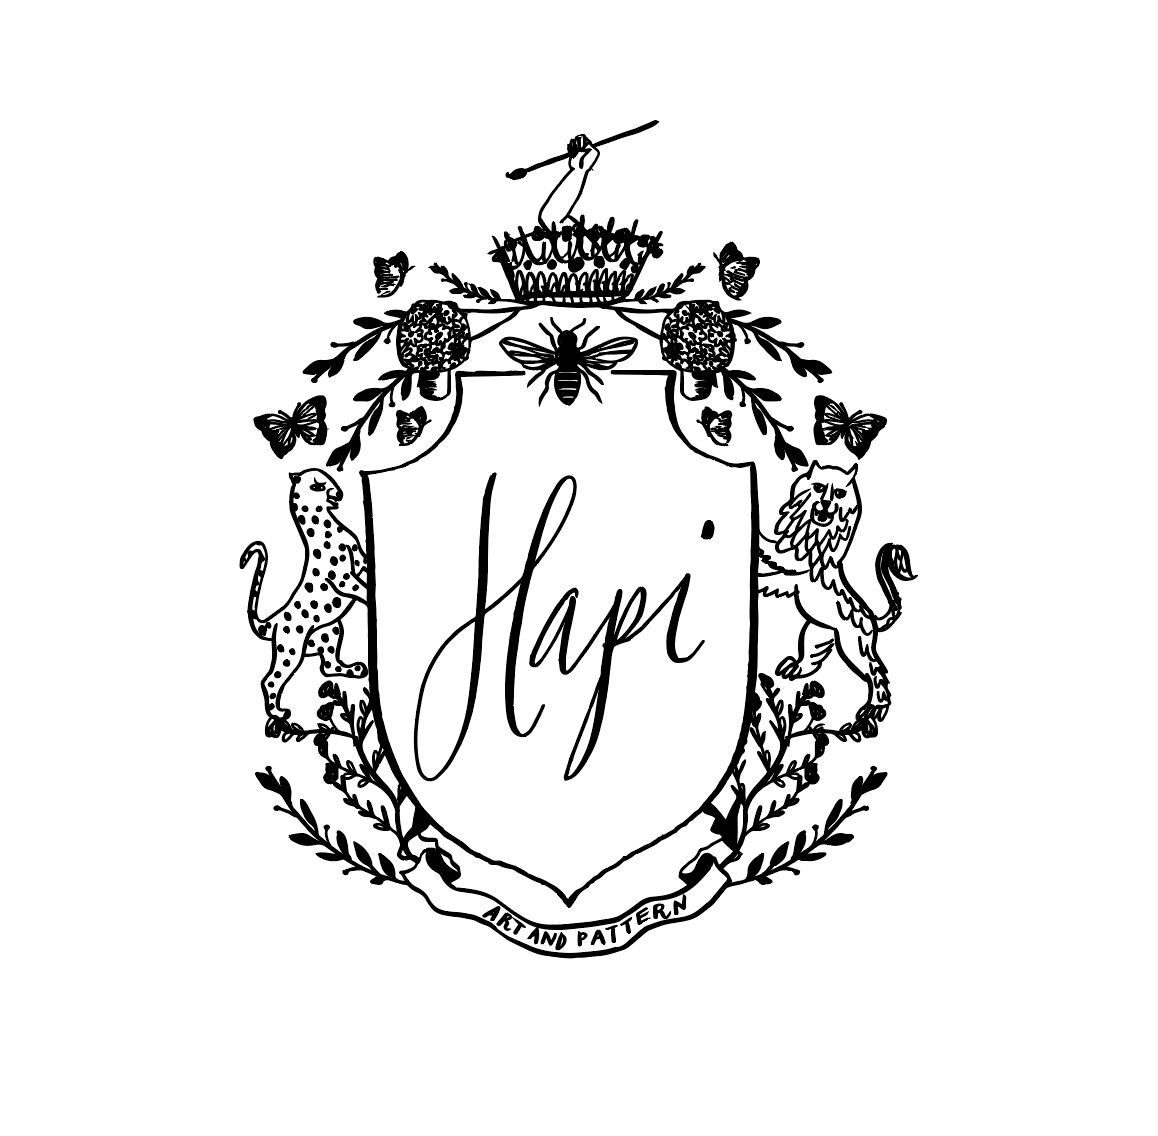 Hapi Art and Pattern LLC_logo